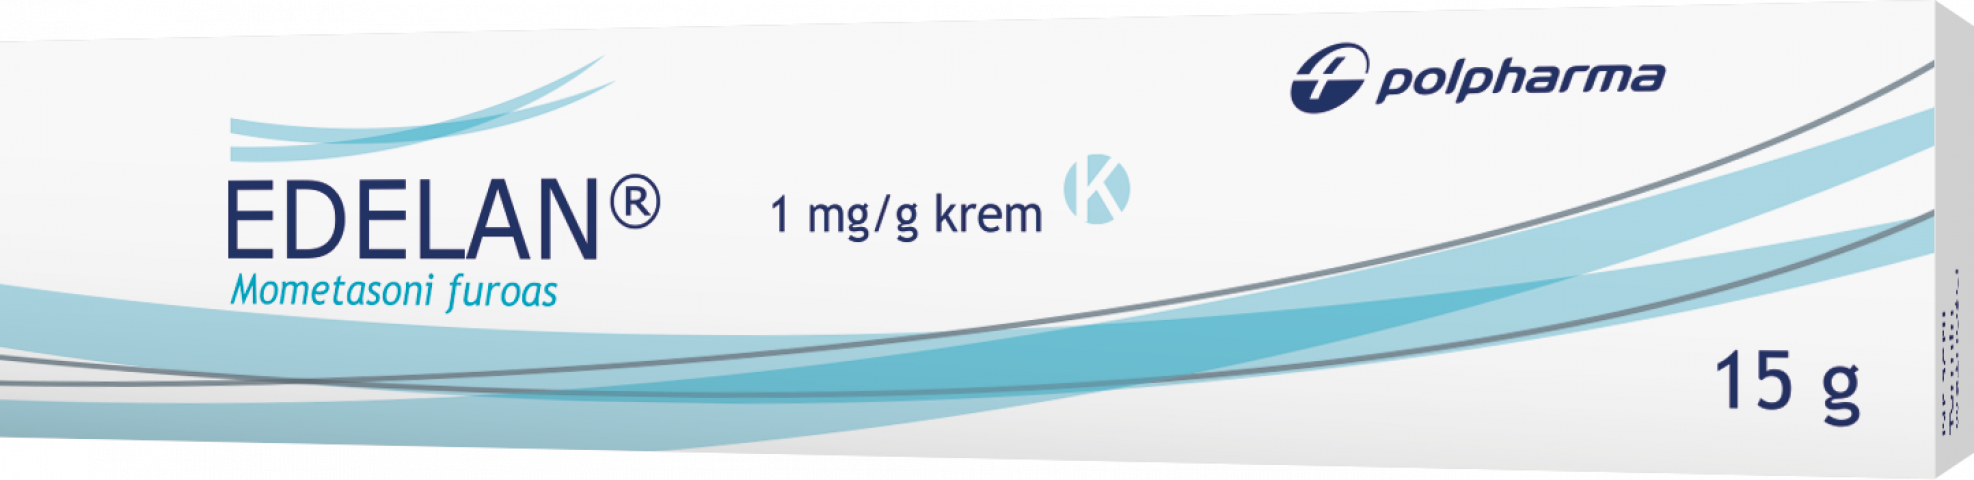 Edelan krem 1 mg/g x 15 g